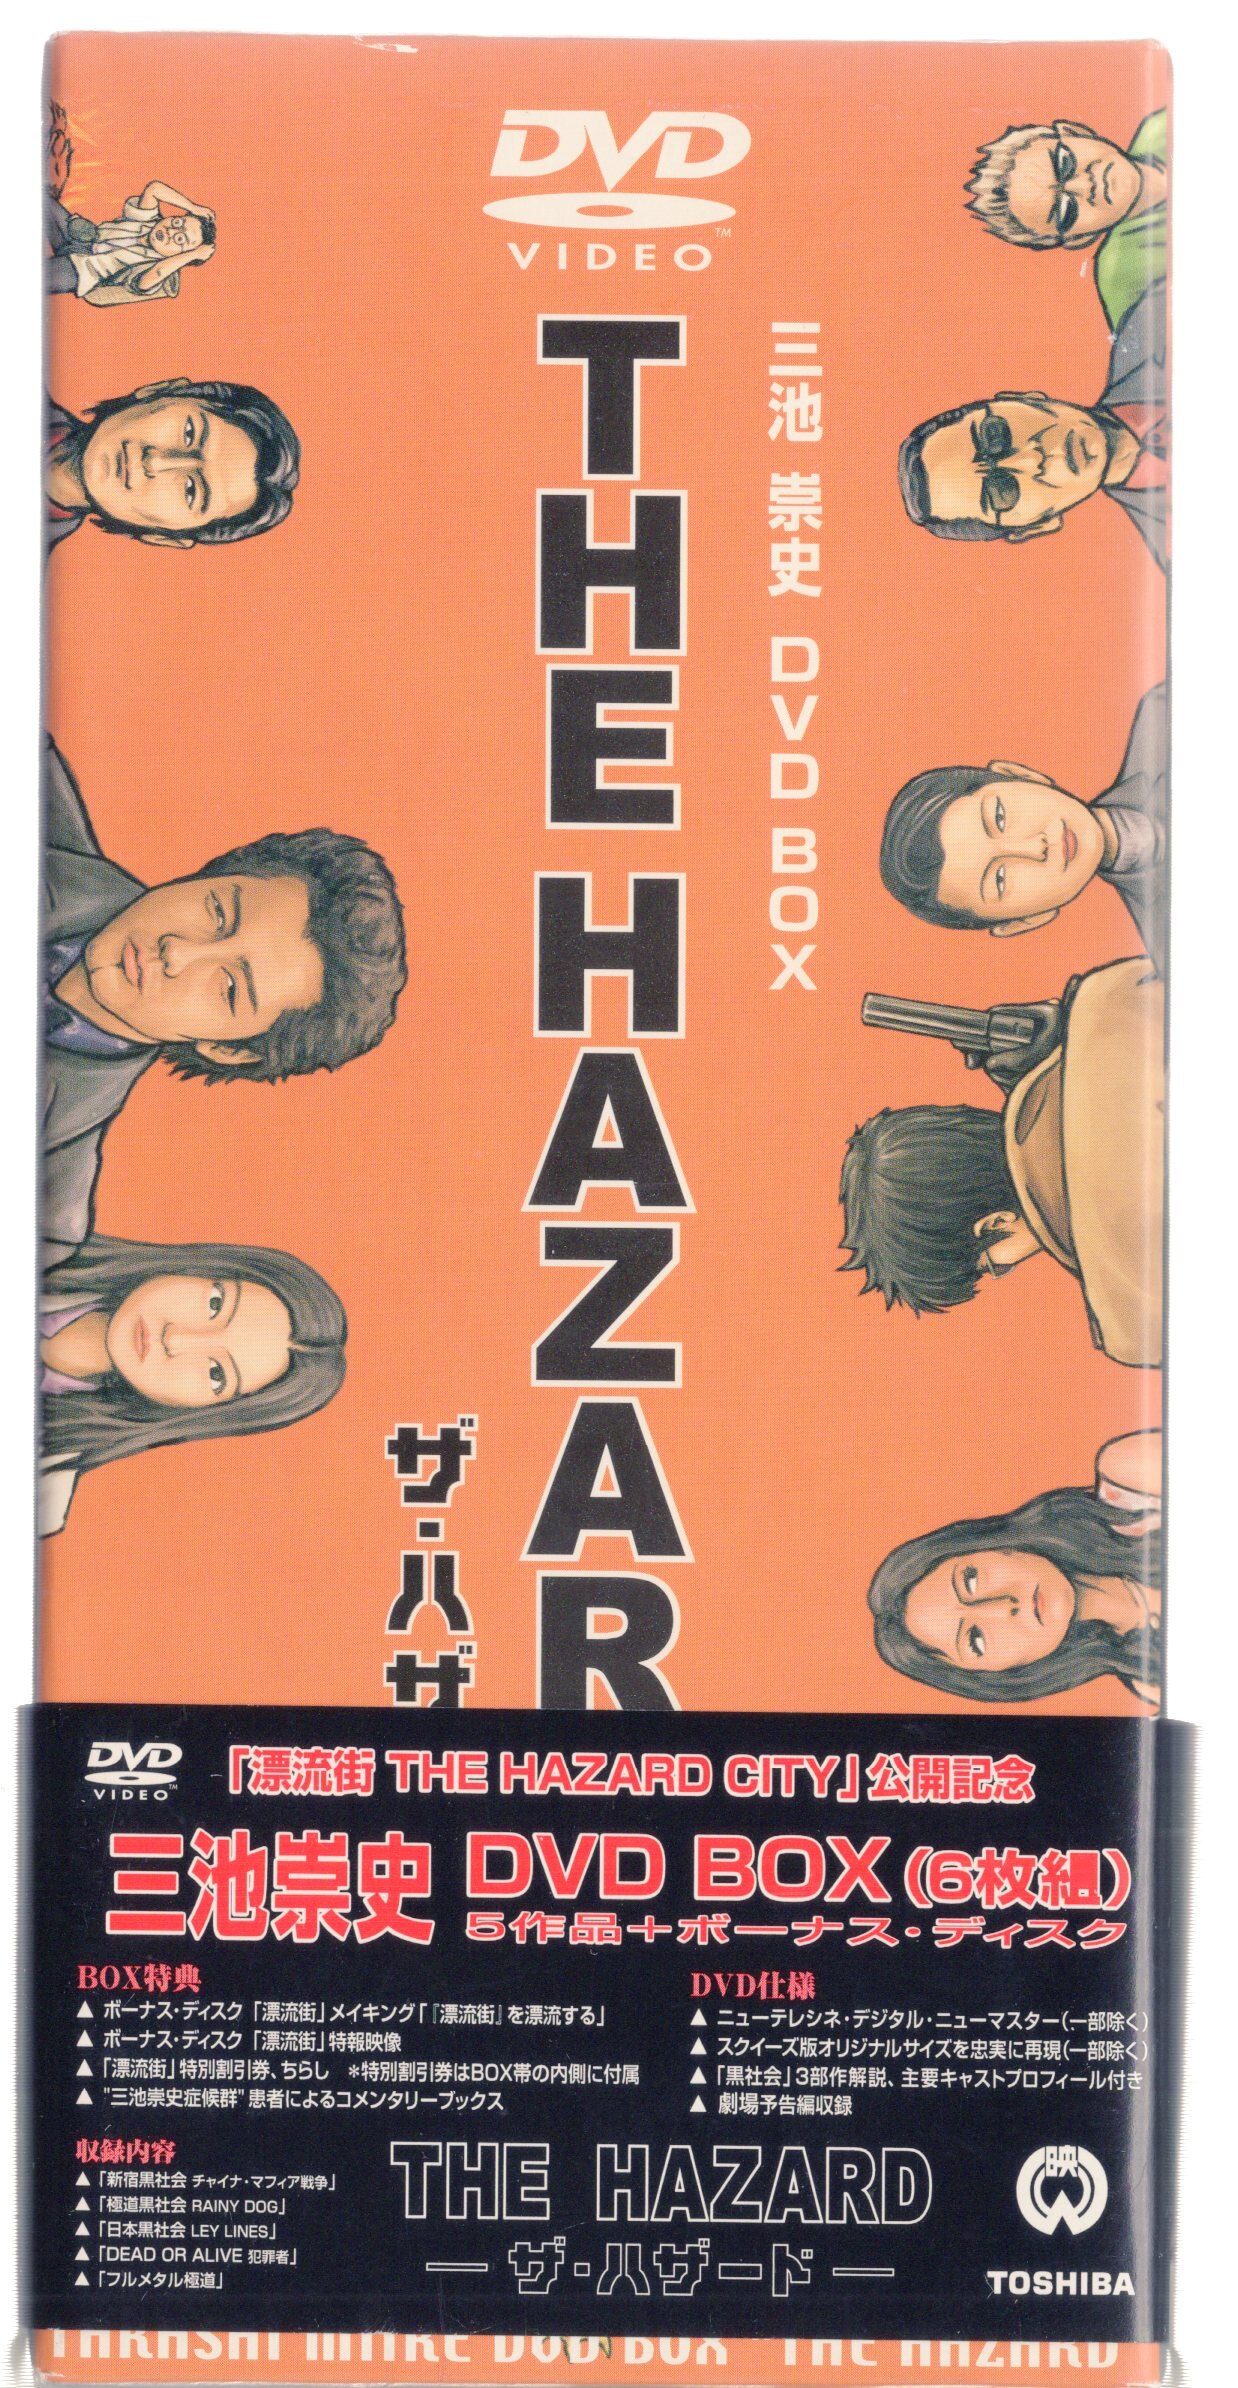 Japanese Dvd Takashi Miike Takashi Miike Dvd Box Limited Edition The Hazard Mandarake Online Shop